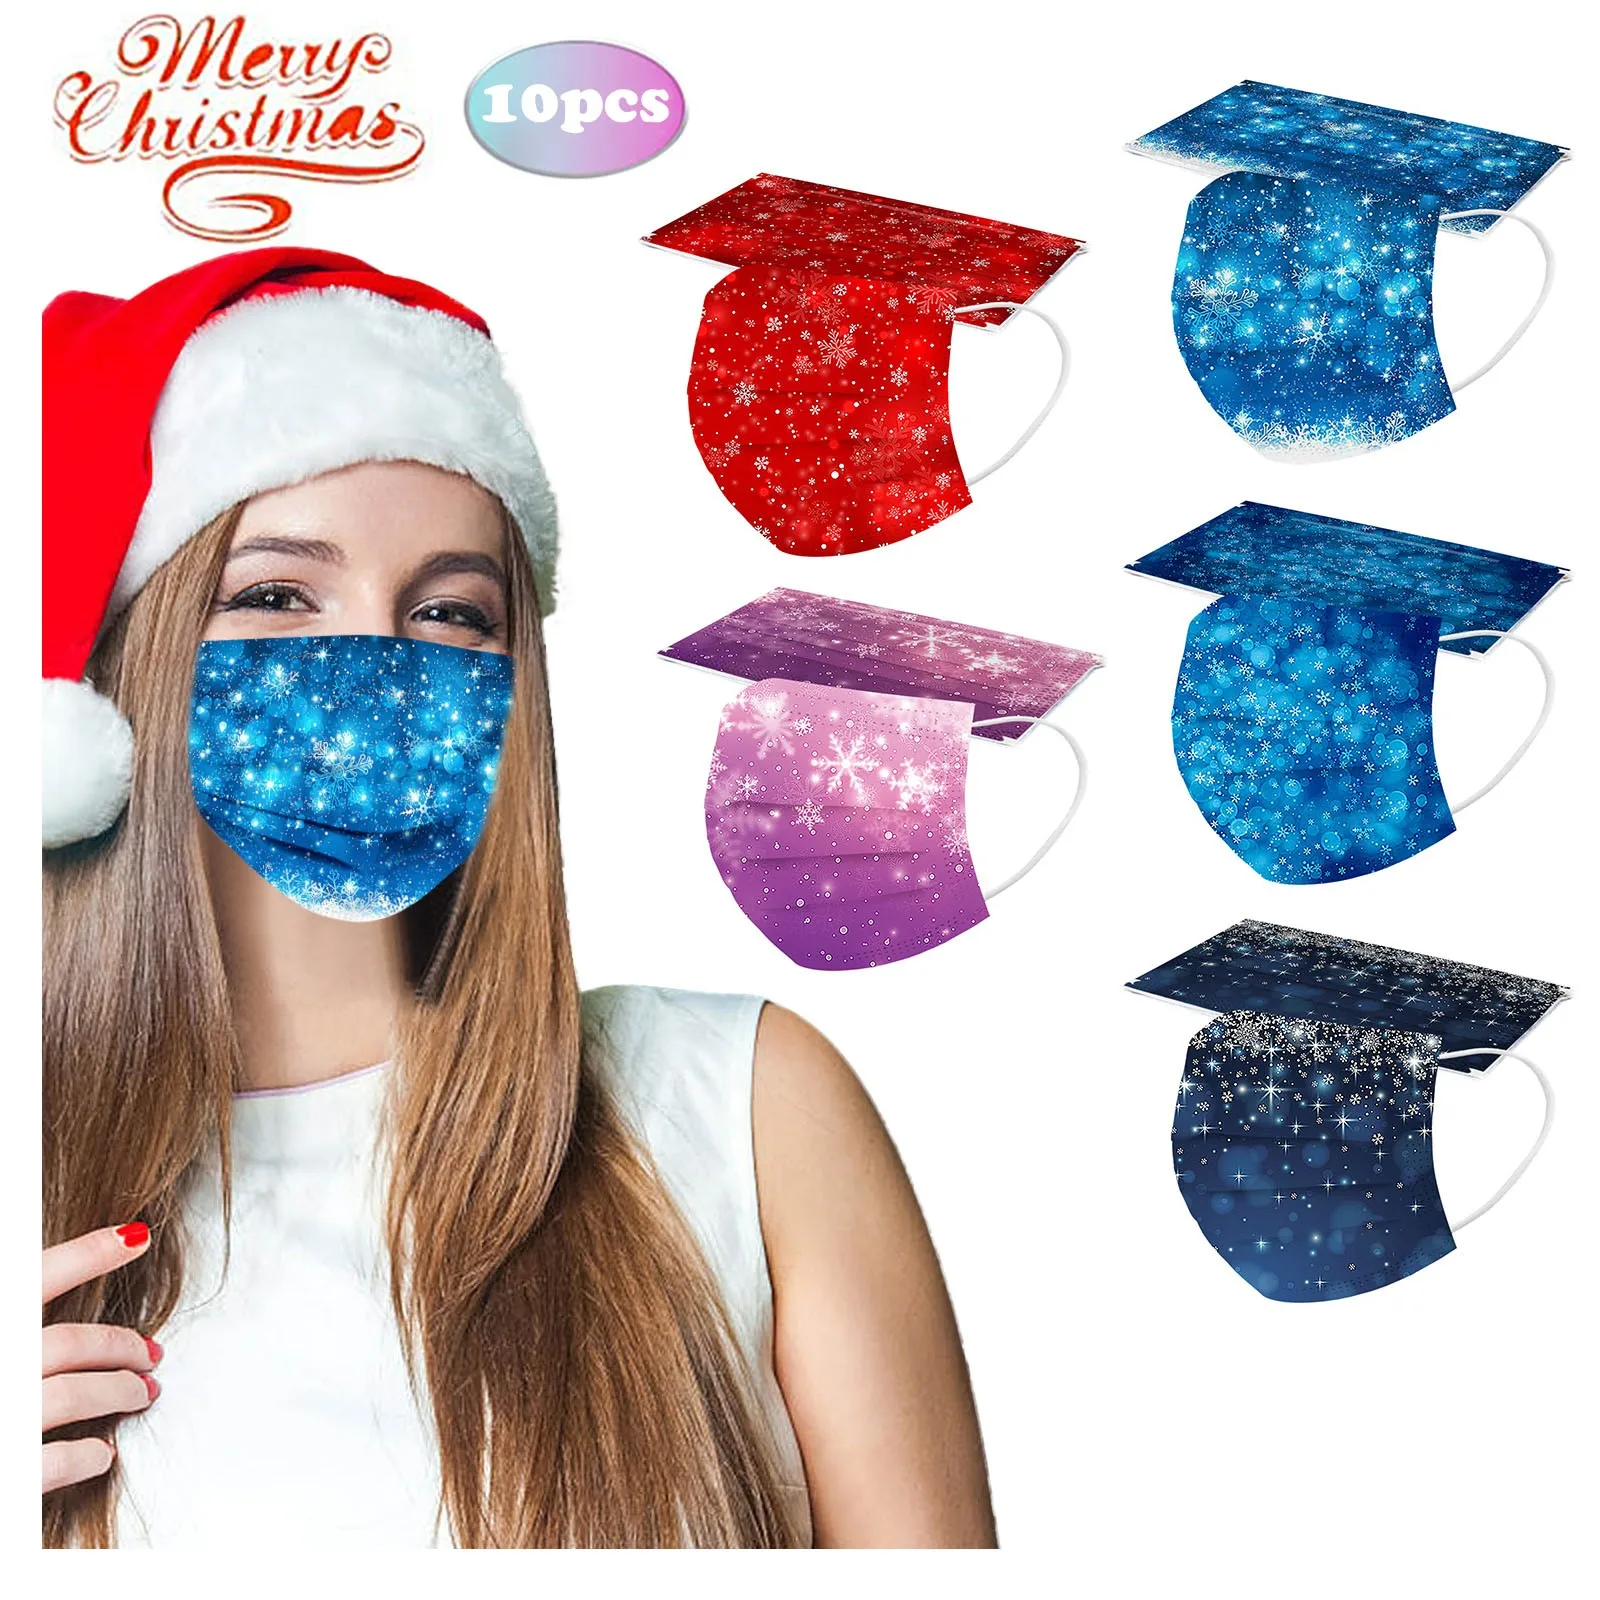 

10pcs Snowflake Printed Face Mask Adult Proteccion Disposable Masks Women 3-ply Covers Fashion Christmas Cosplay Mascara Navid